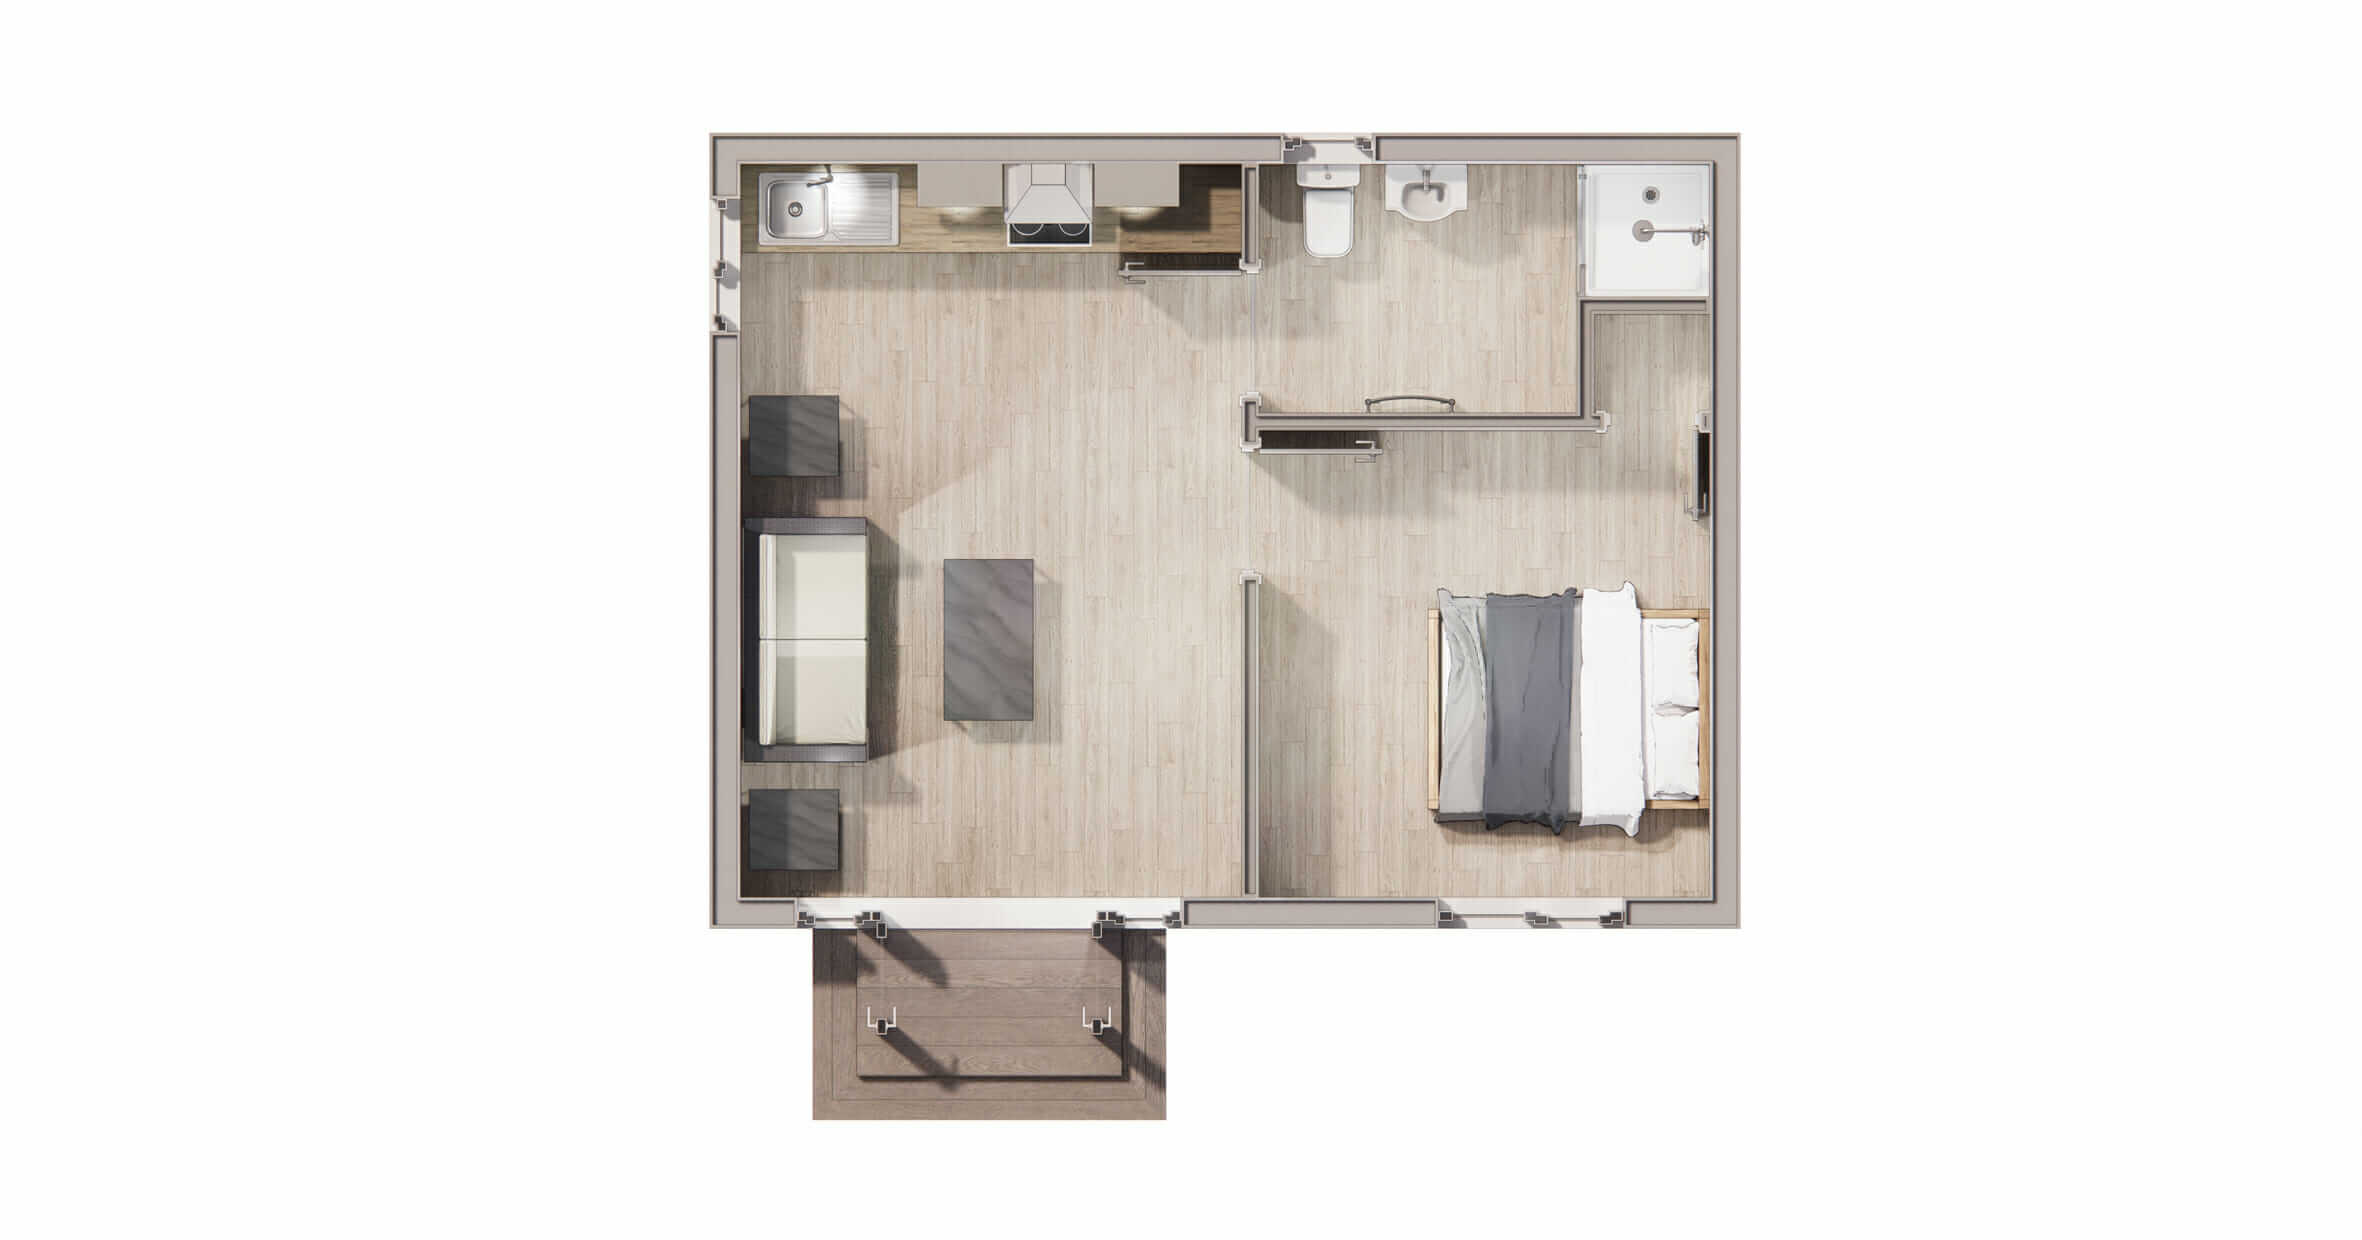 interior CAD image of One bedroom granny annexe